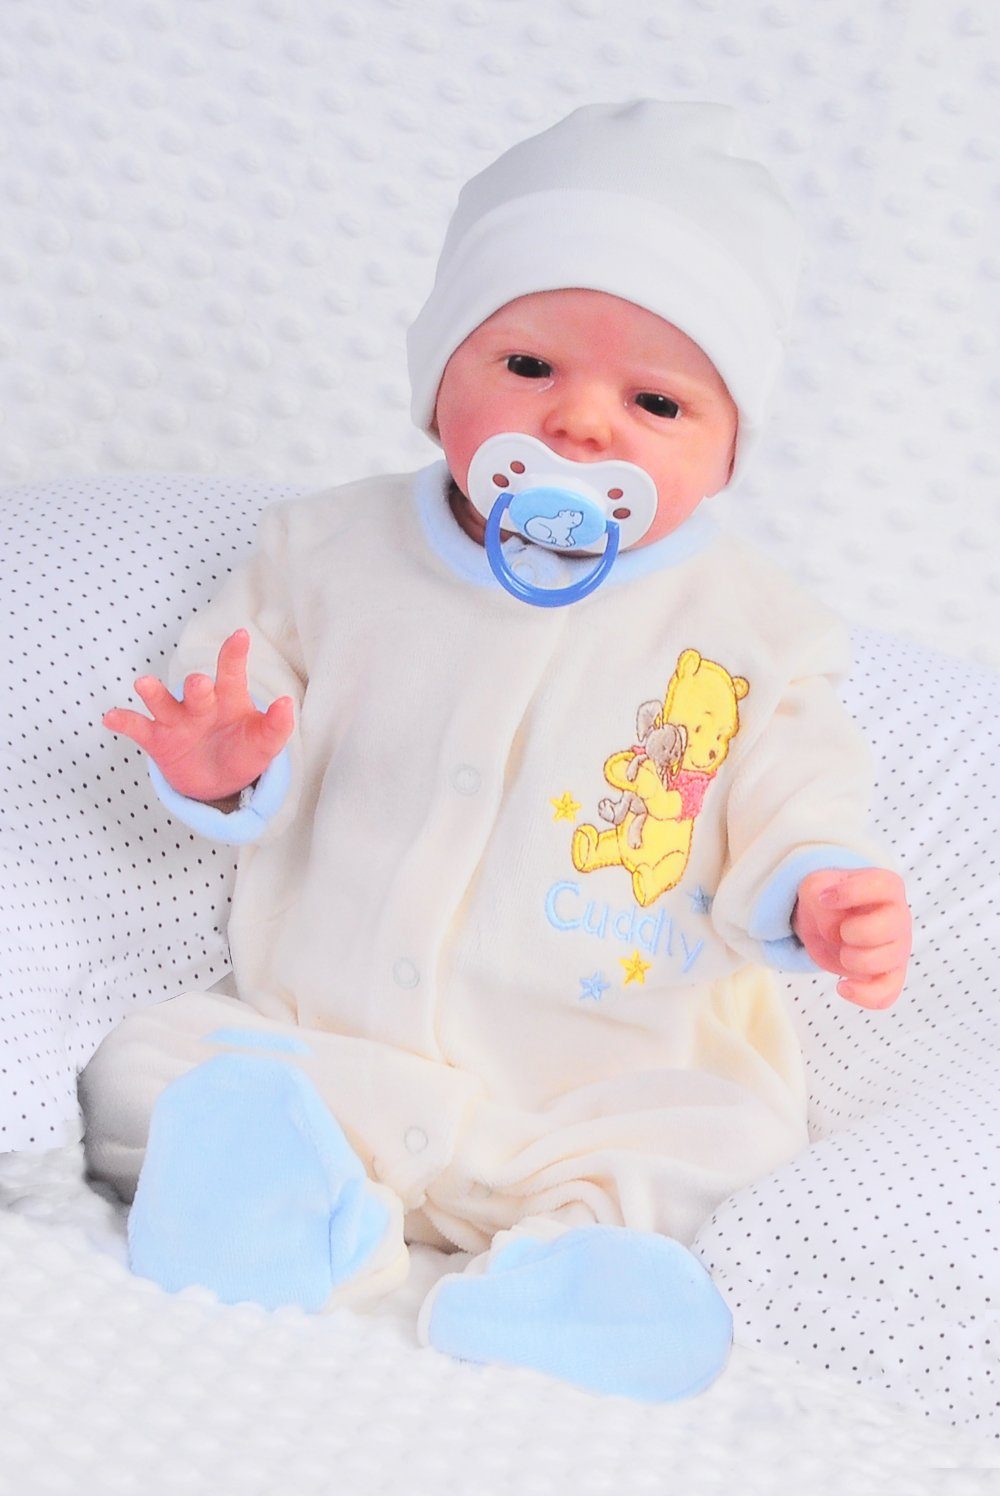 Disney Baby Strampler Baby Strampler Overall warm für Neugeborene 44 46 50